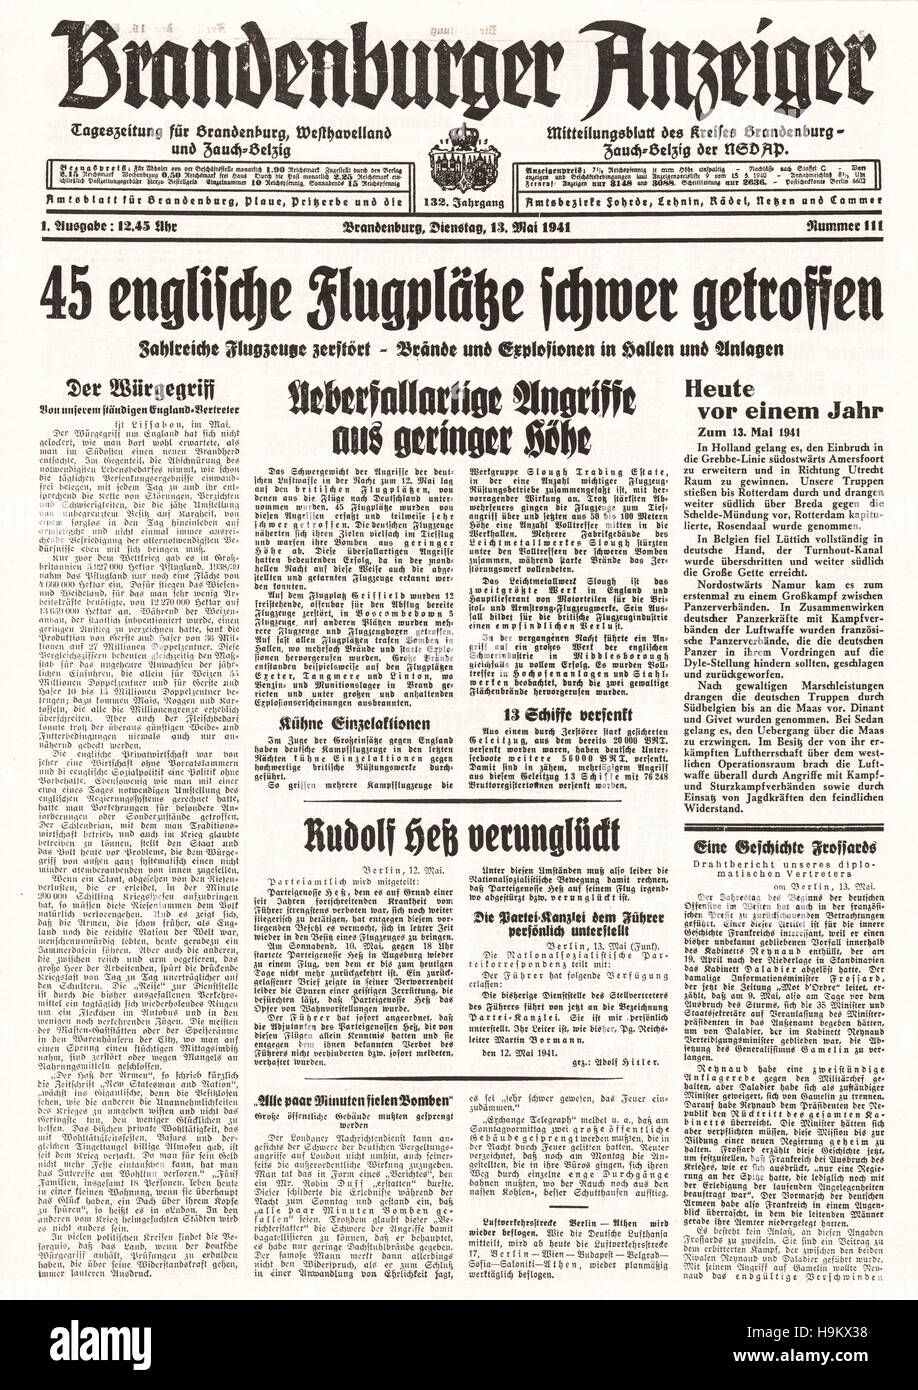 1941 Brandenburger Anzeiger front page Hitler's Deputy Rudolf Hess files to Britain Stock Photo